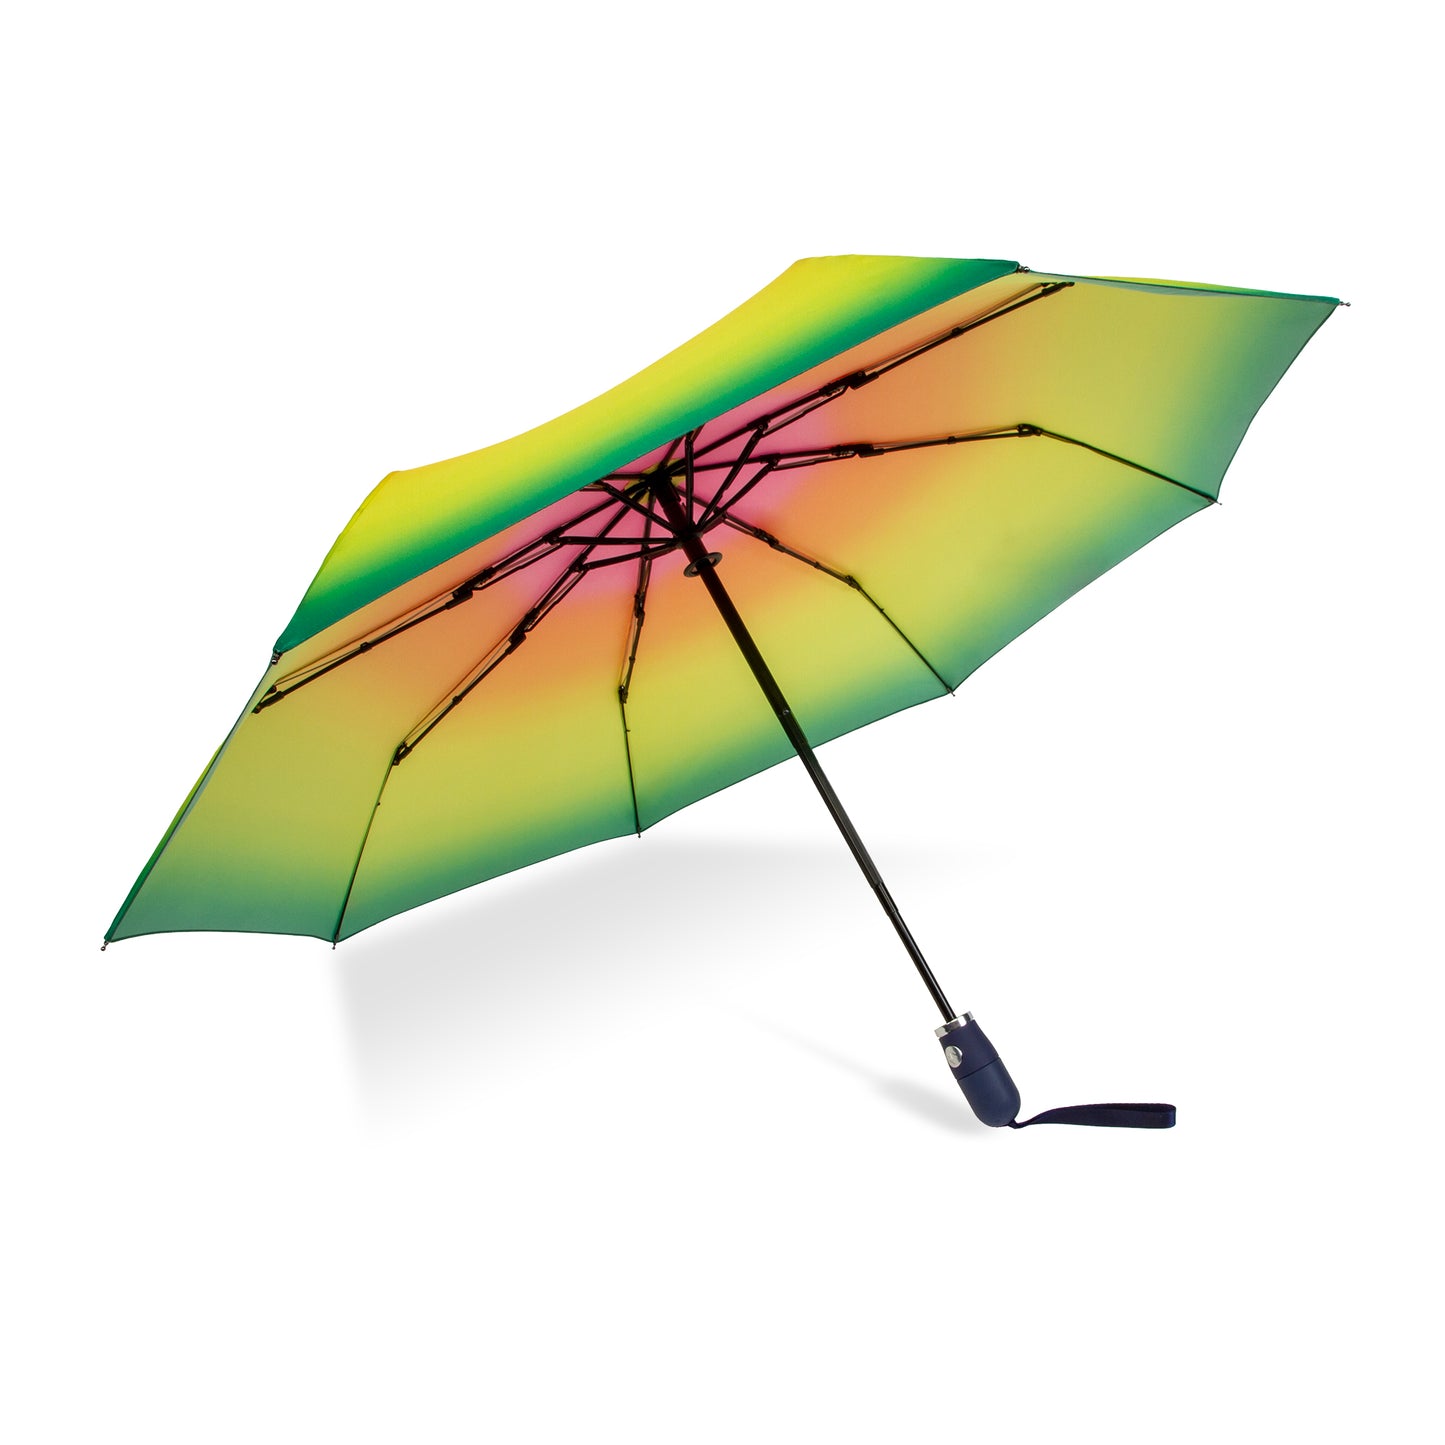 TRINA TURK x SHED RAIN Ombre Compact Umbrella